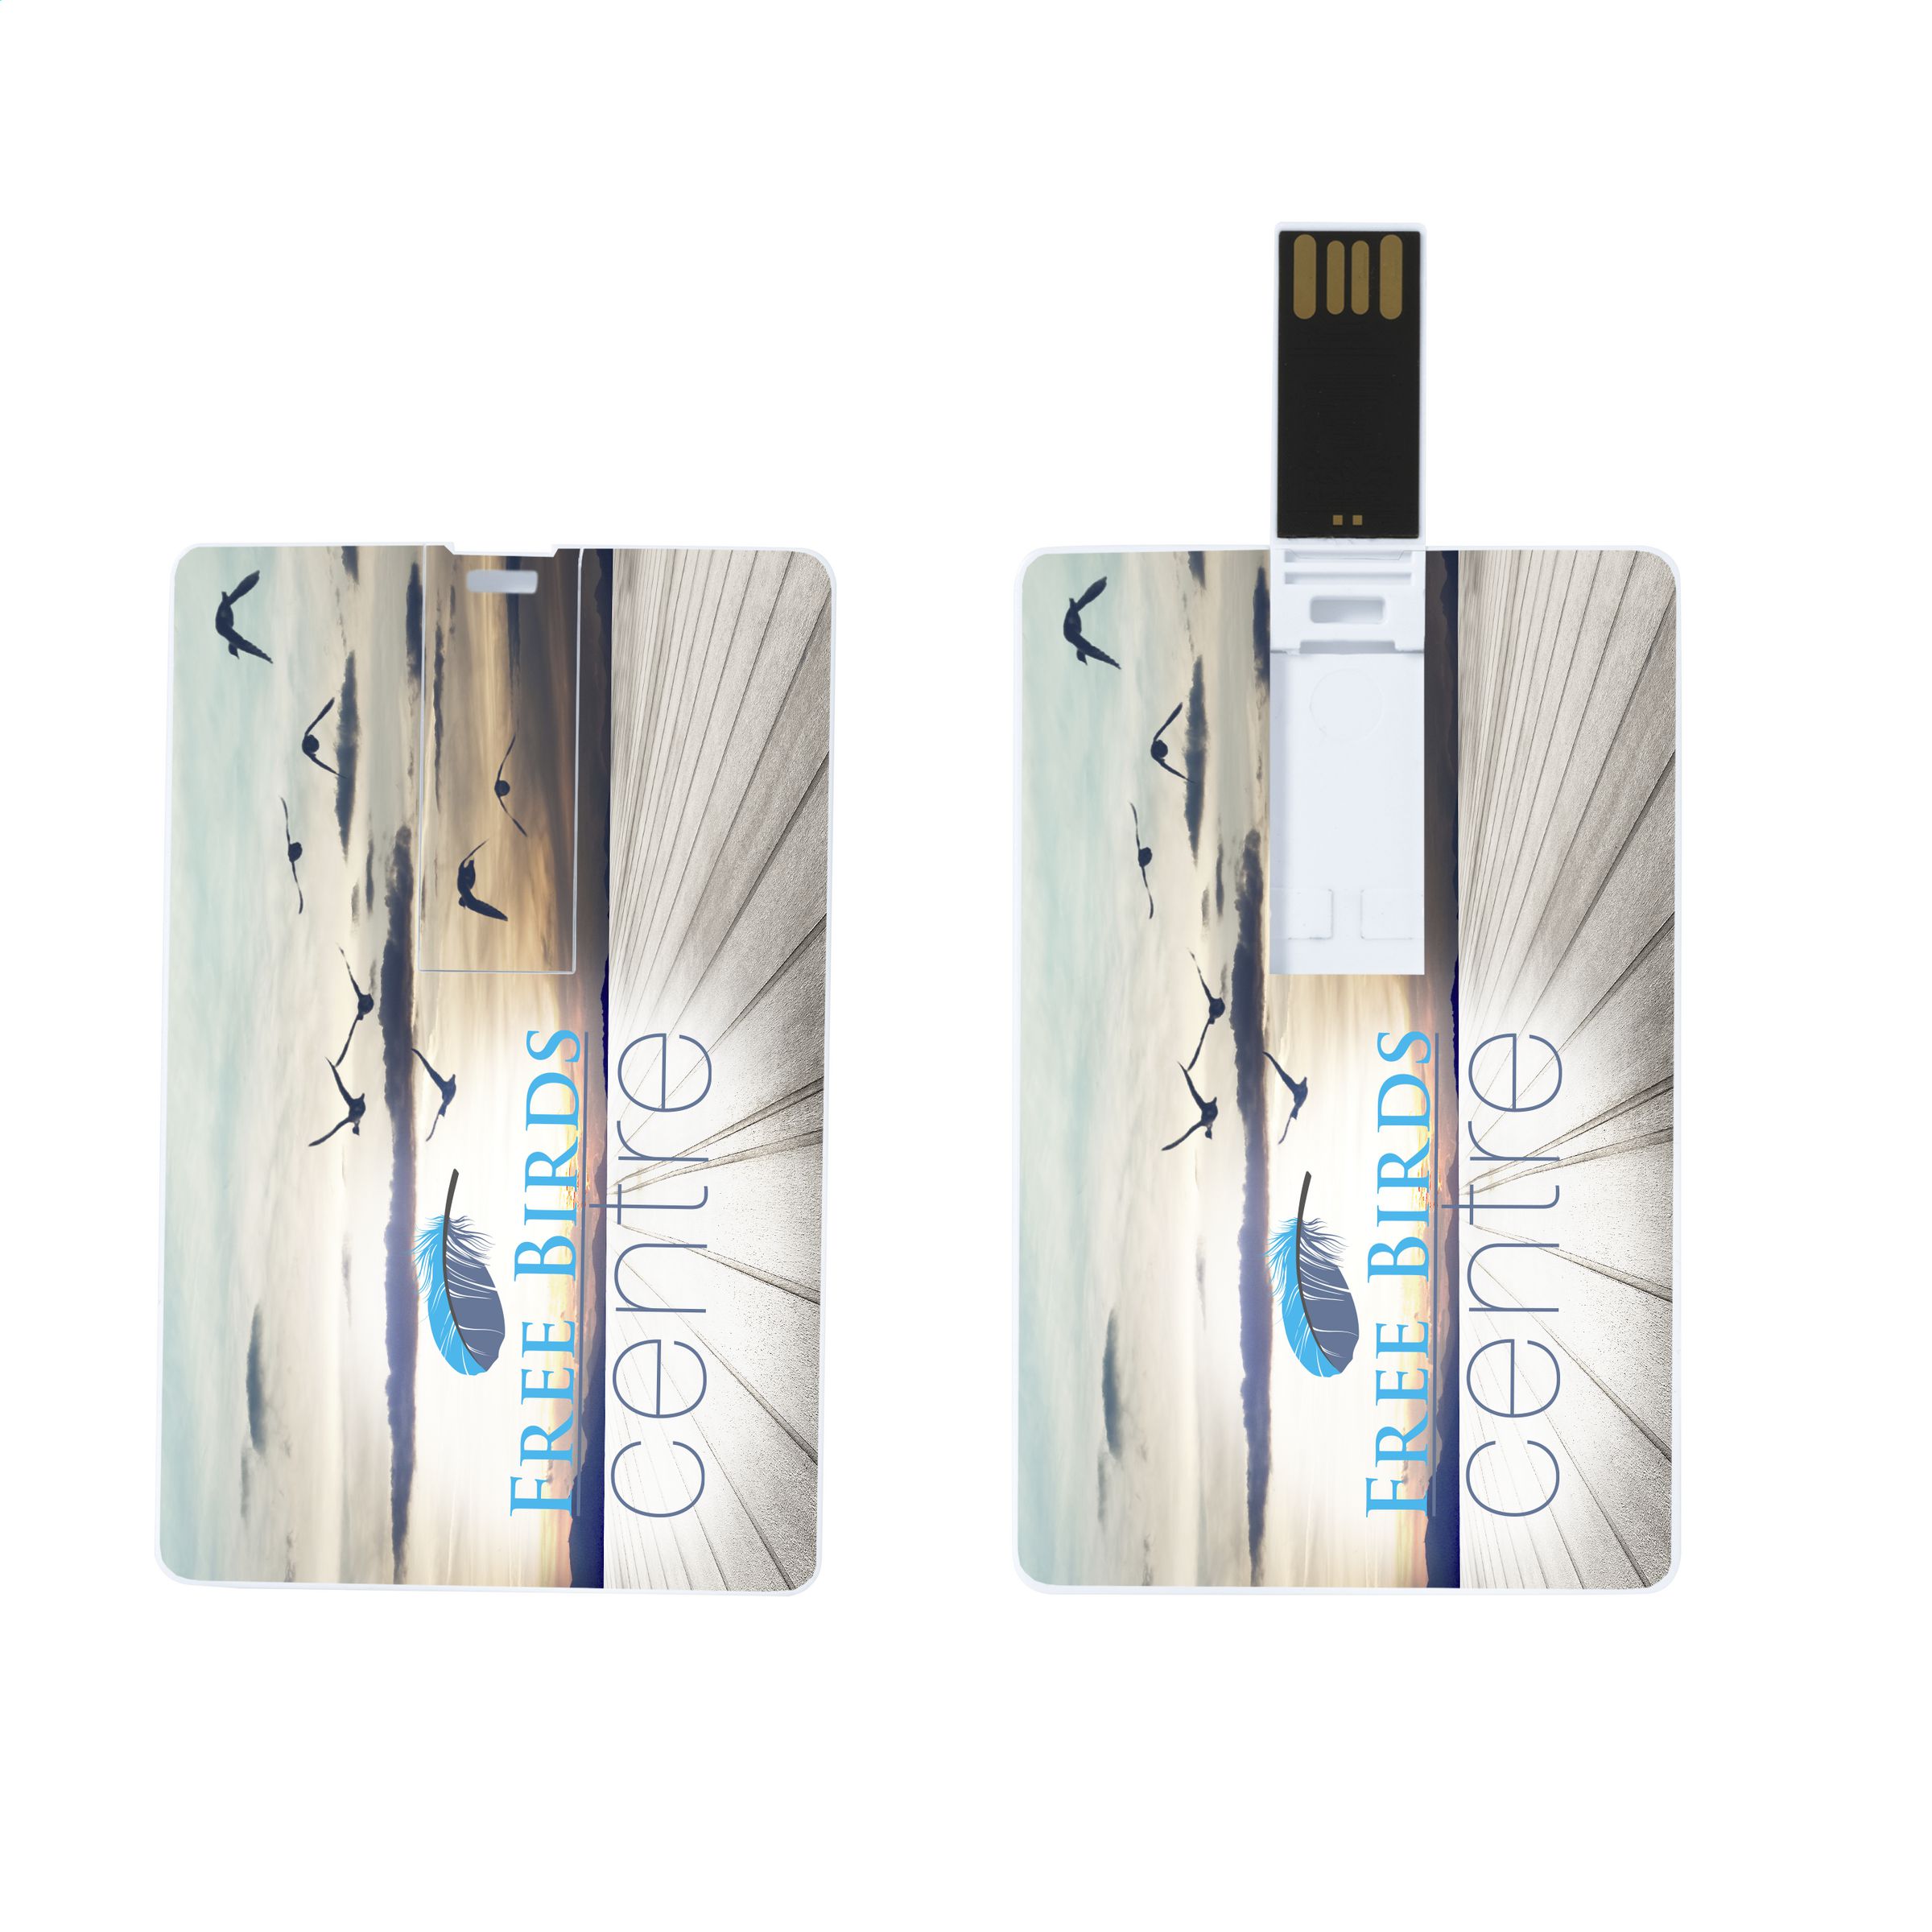 SlimCard USB 2.0 - Laureto